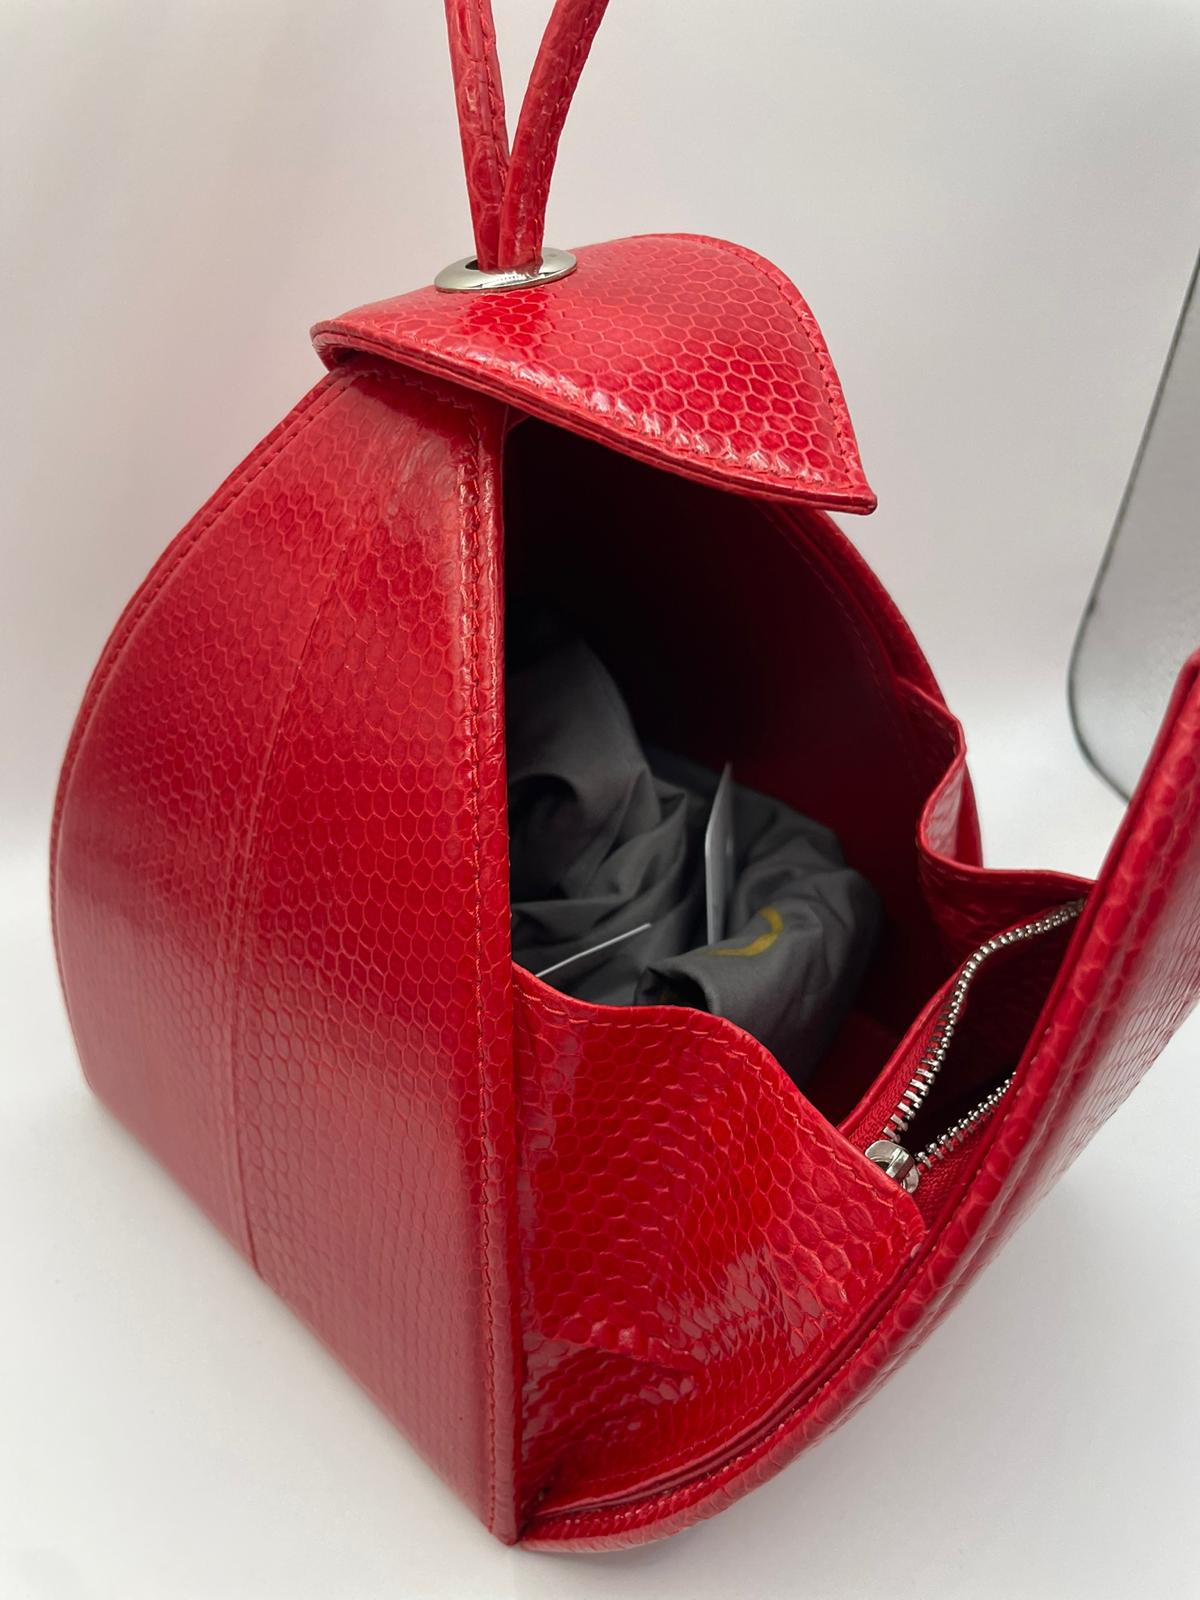 Bangkok Bootery red handbag